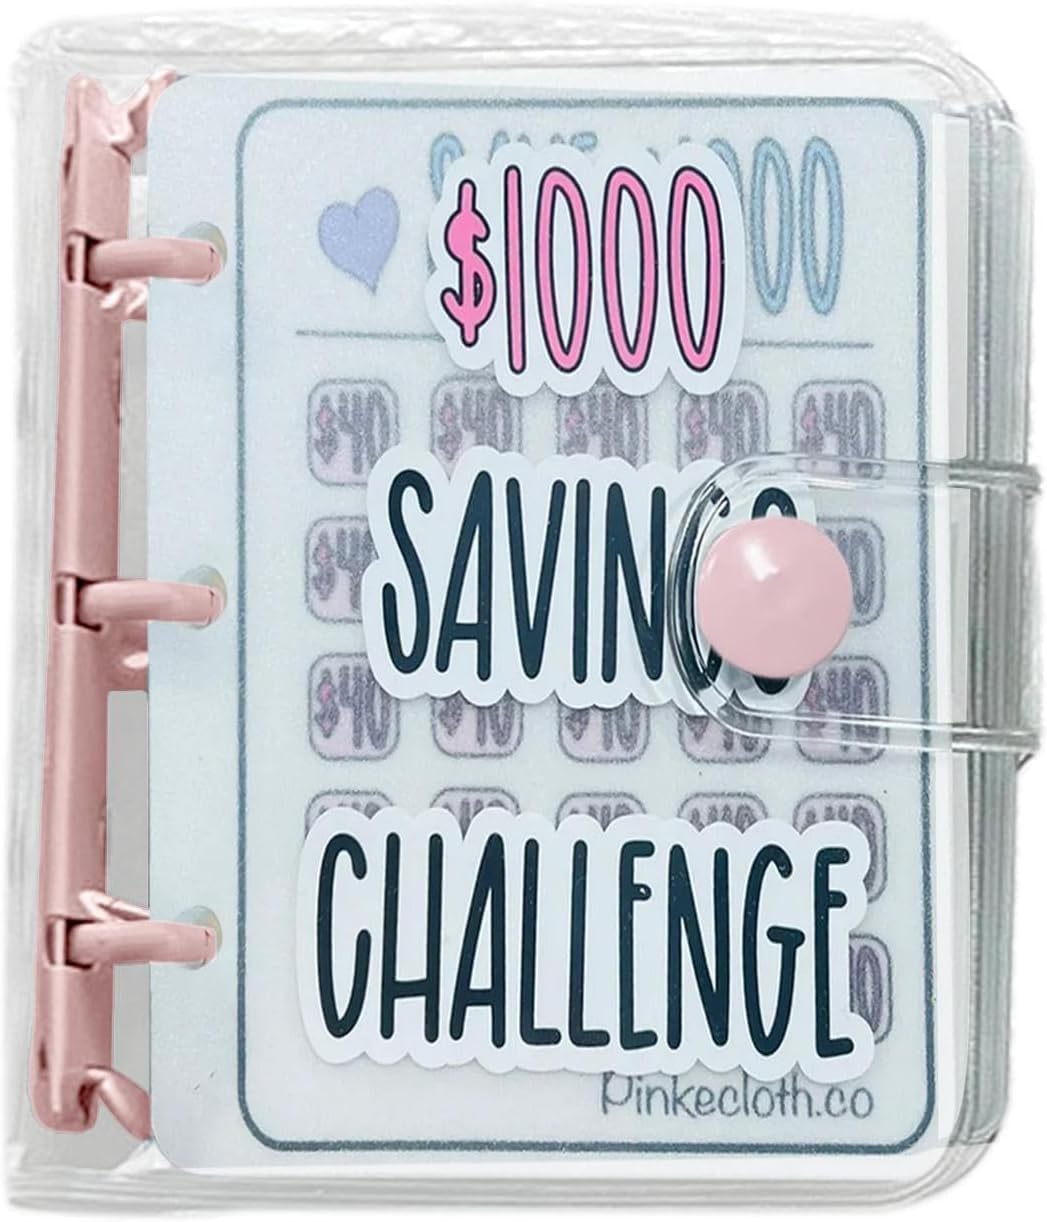 $1000 Savings Challenge Binder